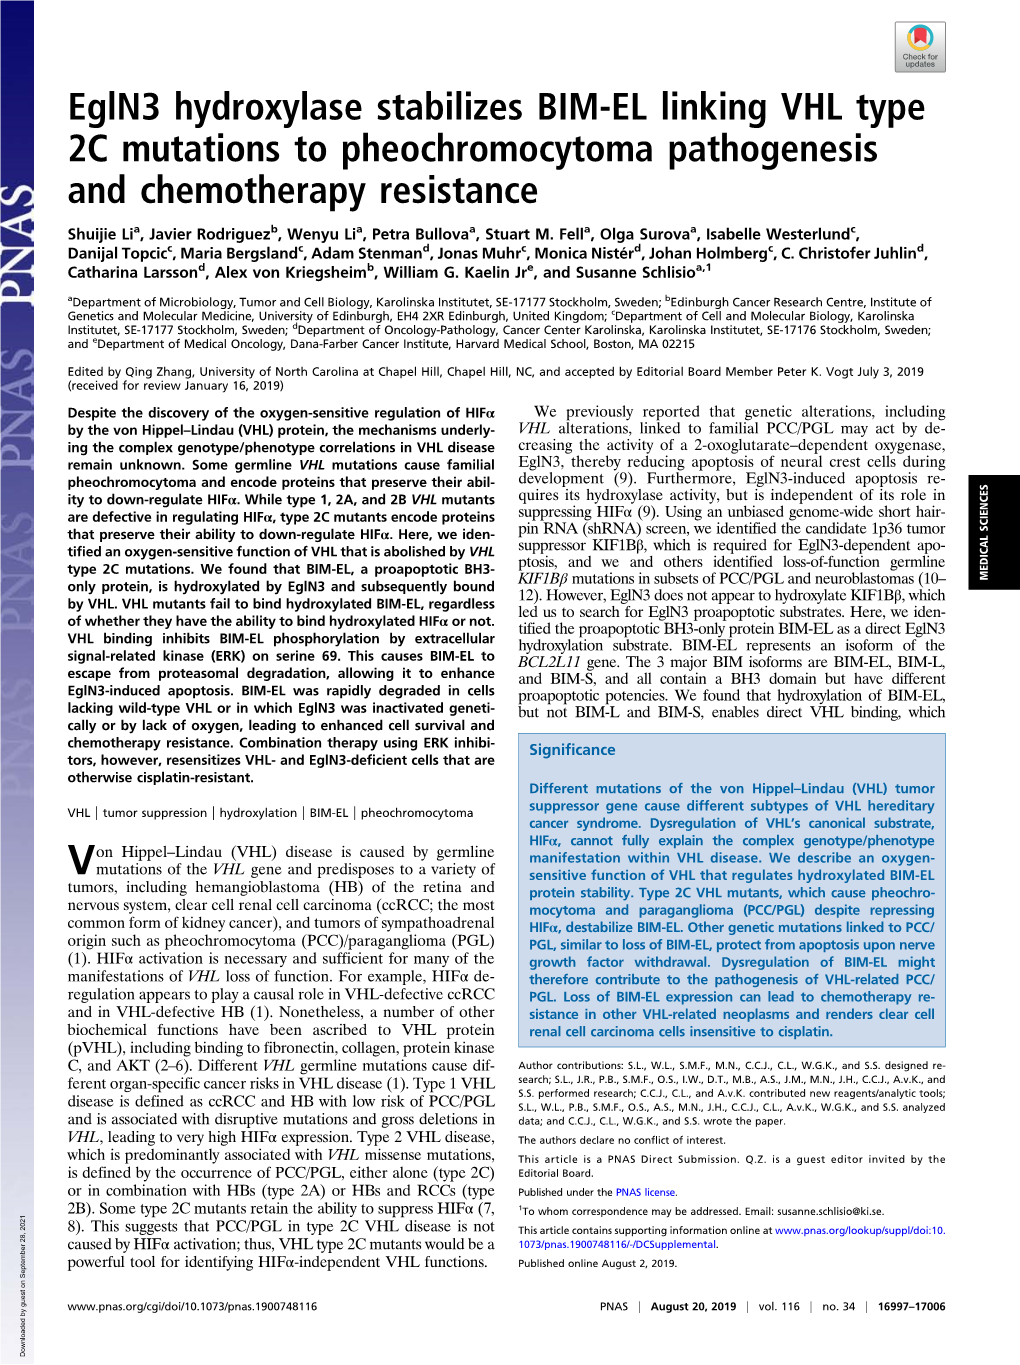 Egln3 Hydroxylase Stabilizes BIM-EL Linking VHL Type 2C Mutations to Pheochromocytoma Pathogenesis and Chemotherapy Resistance